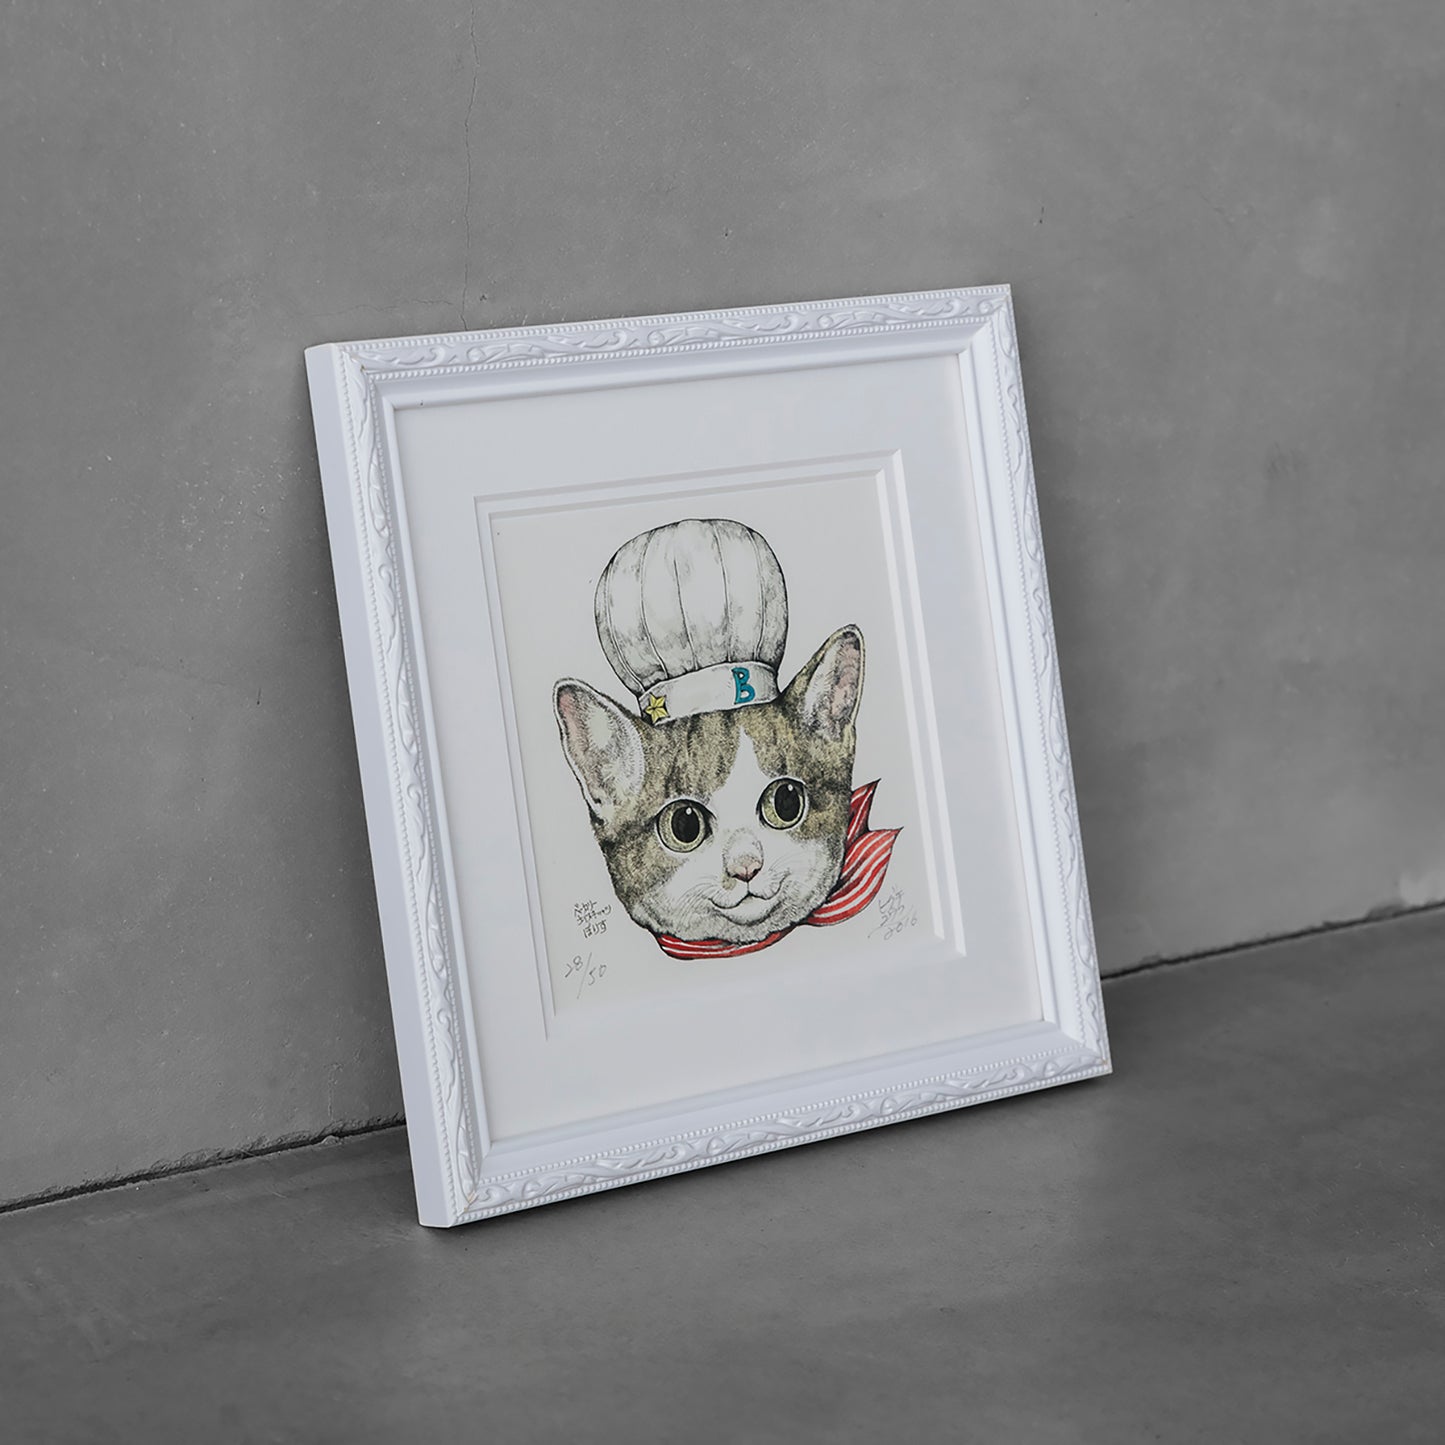 [Framed] Reproduced painting Bakery Nice Cats Boris